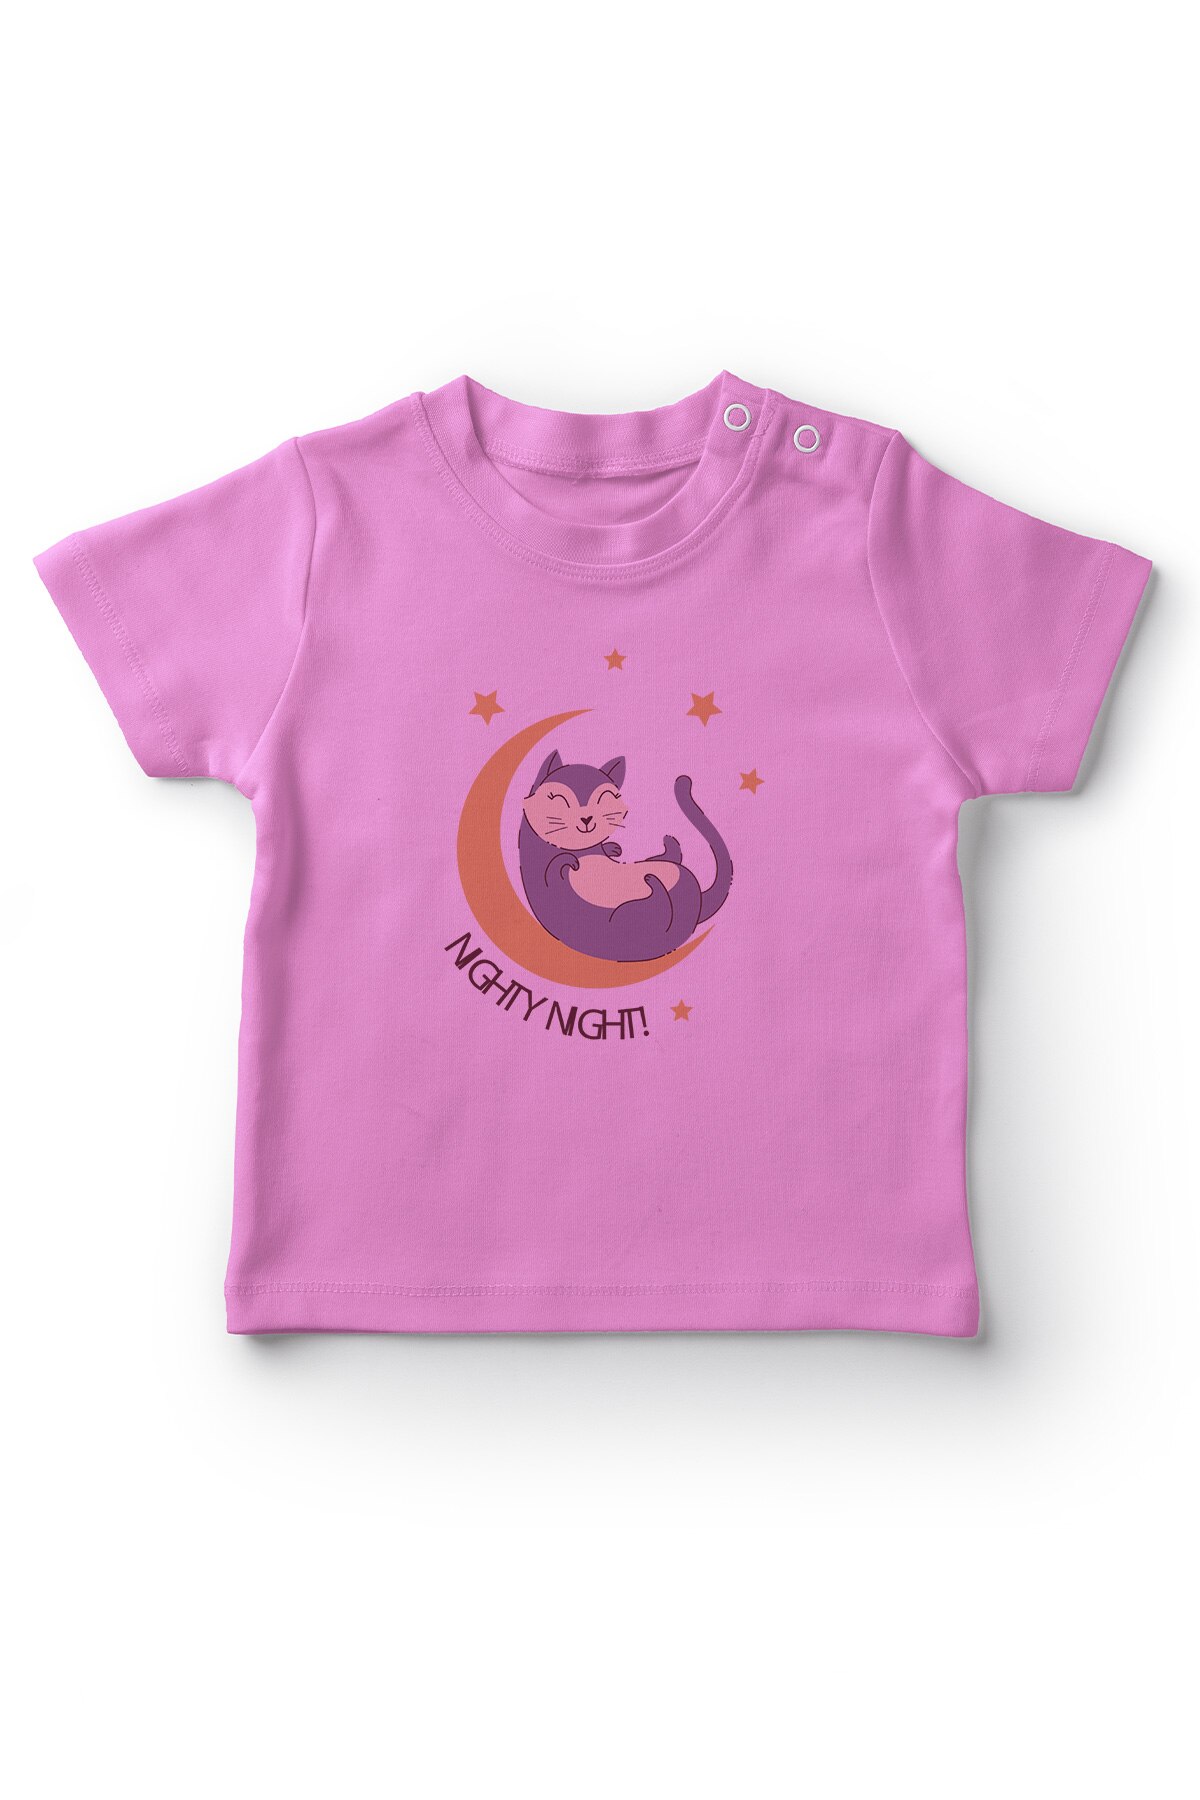 Angemiel Baby Maand Op Kat Baby Meisje T-shirt Roze